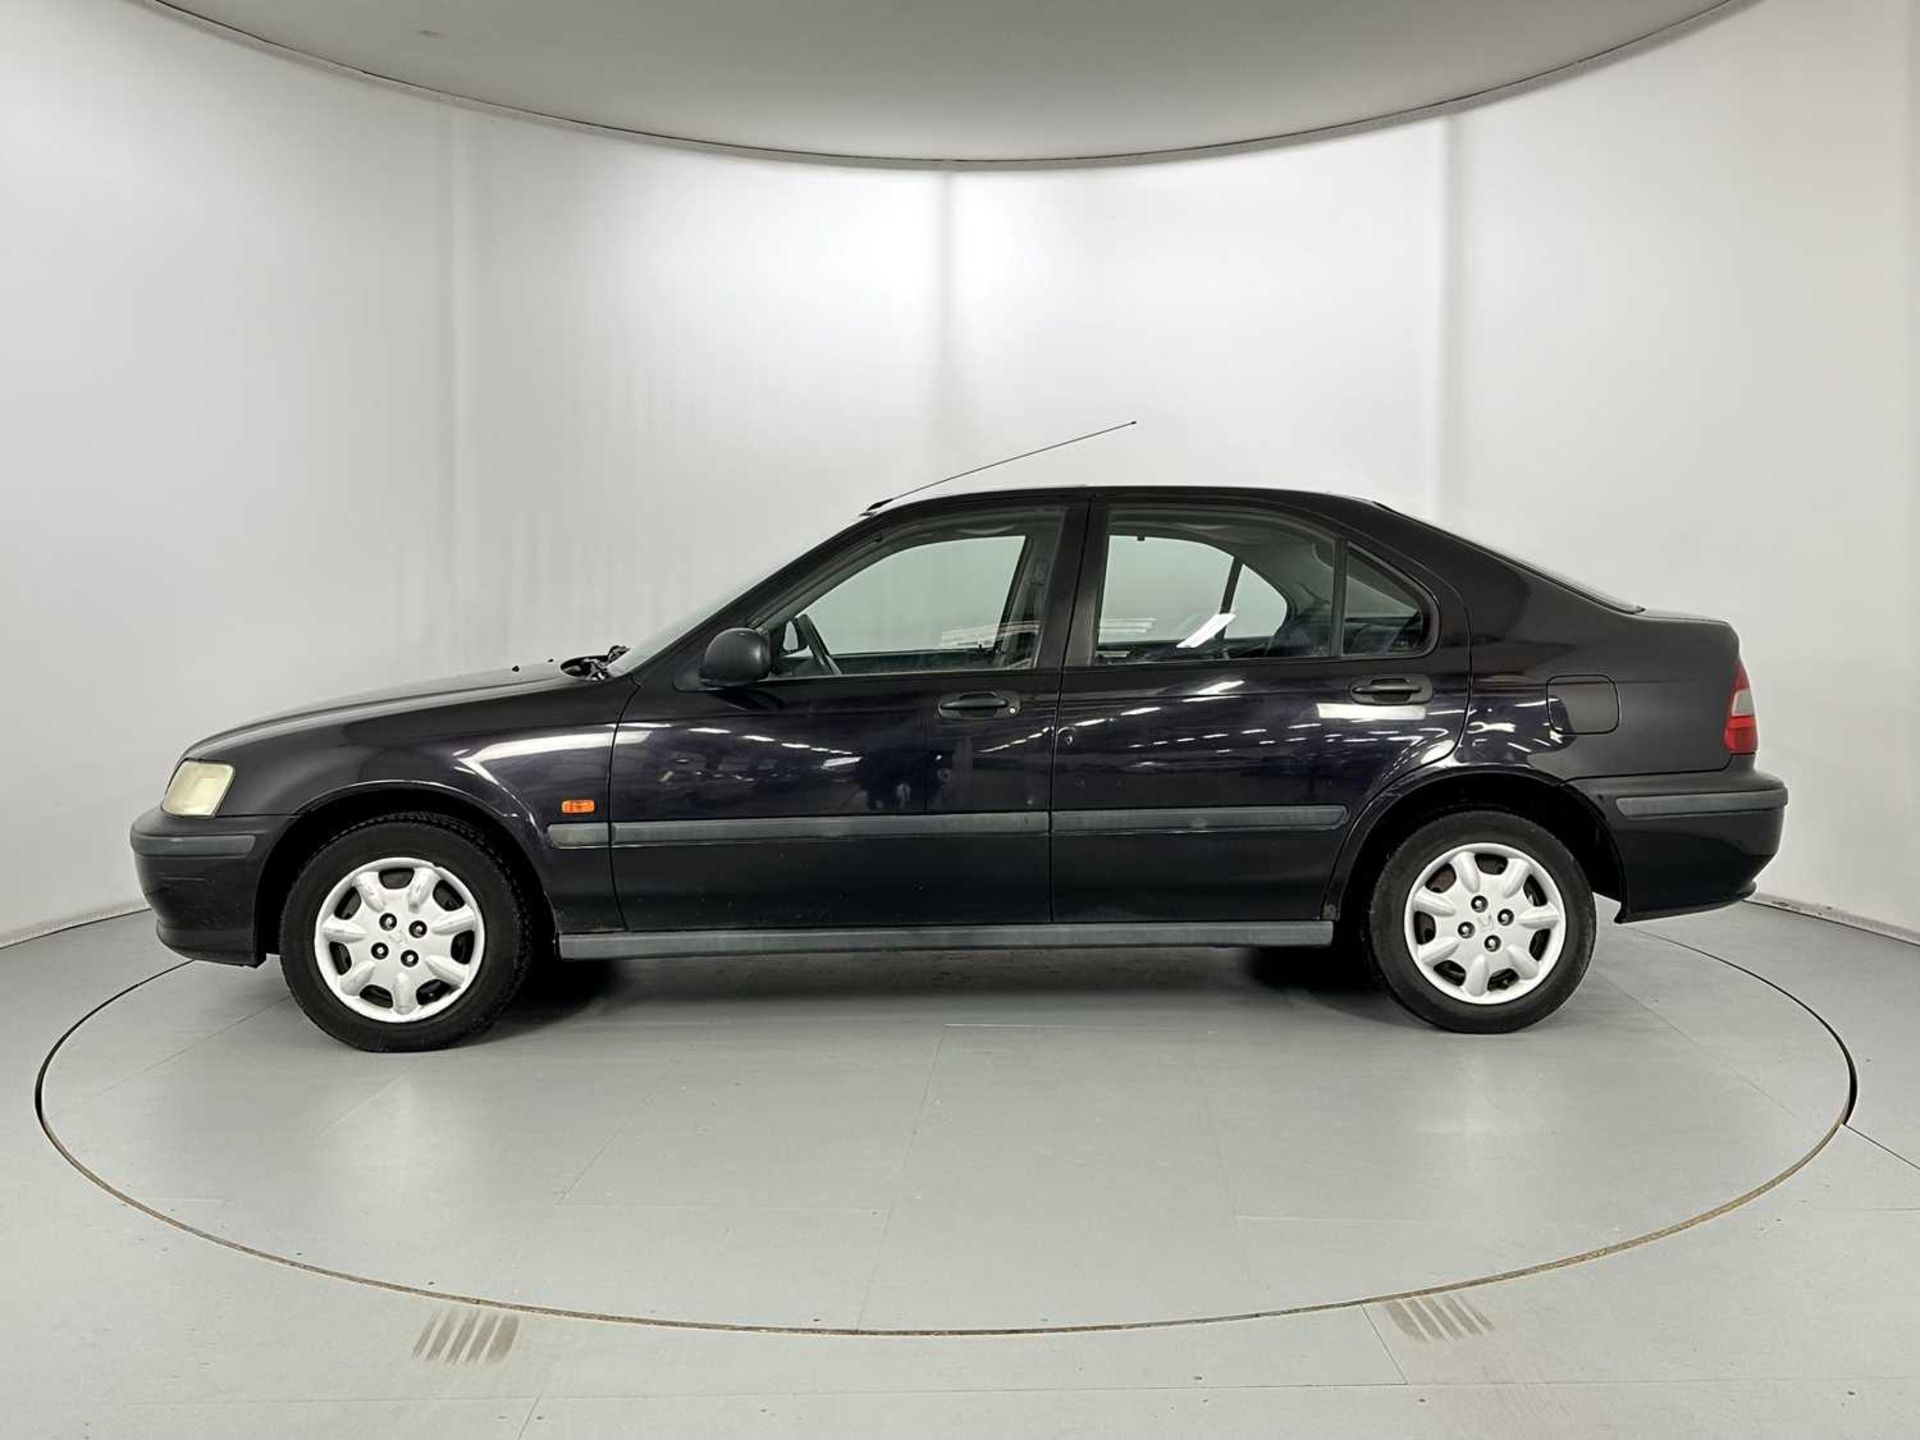 1999 Honda Civic - Image 5 of 34